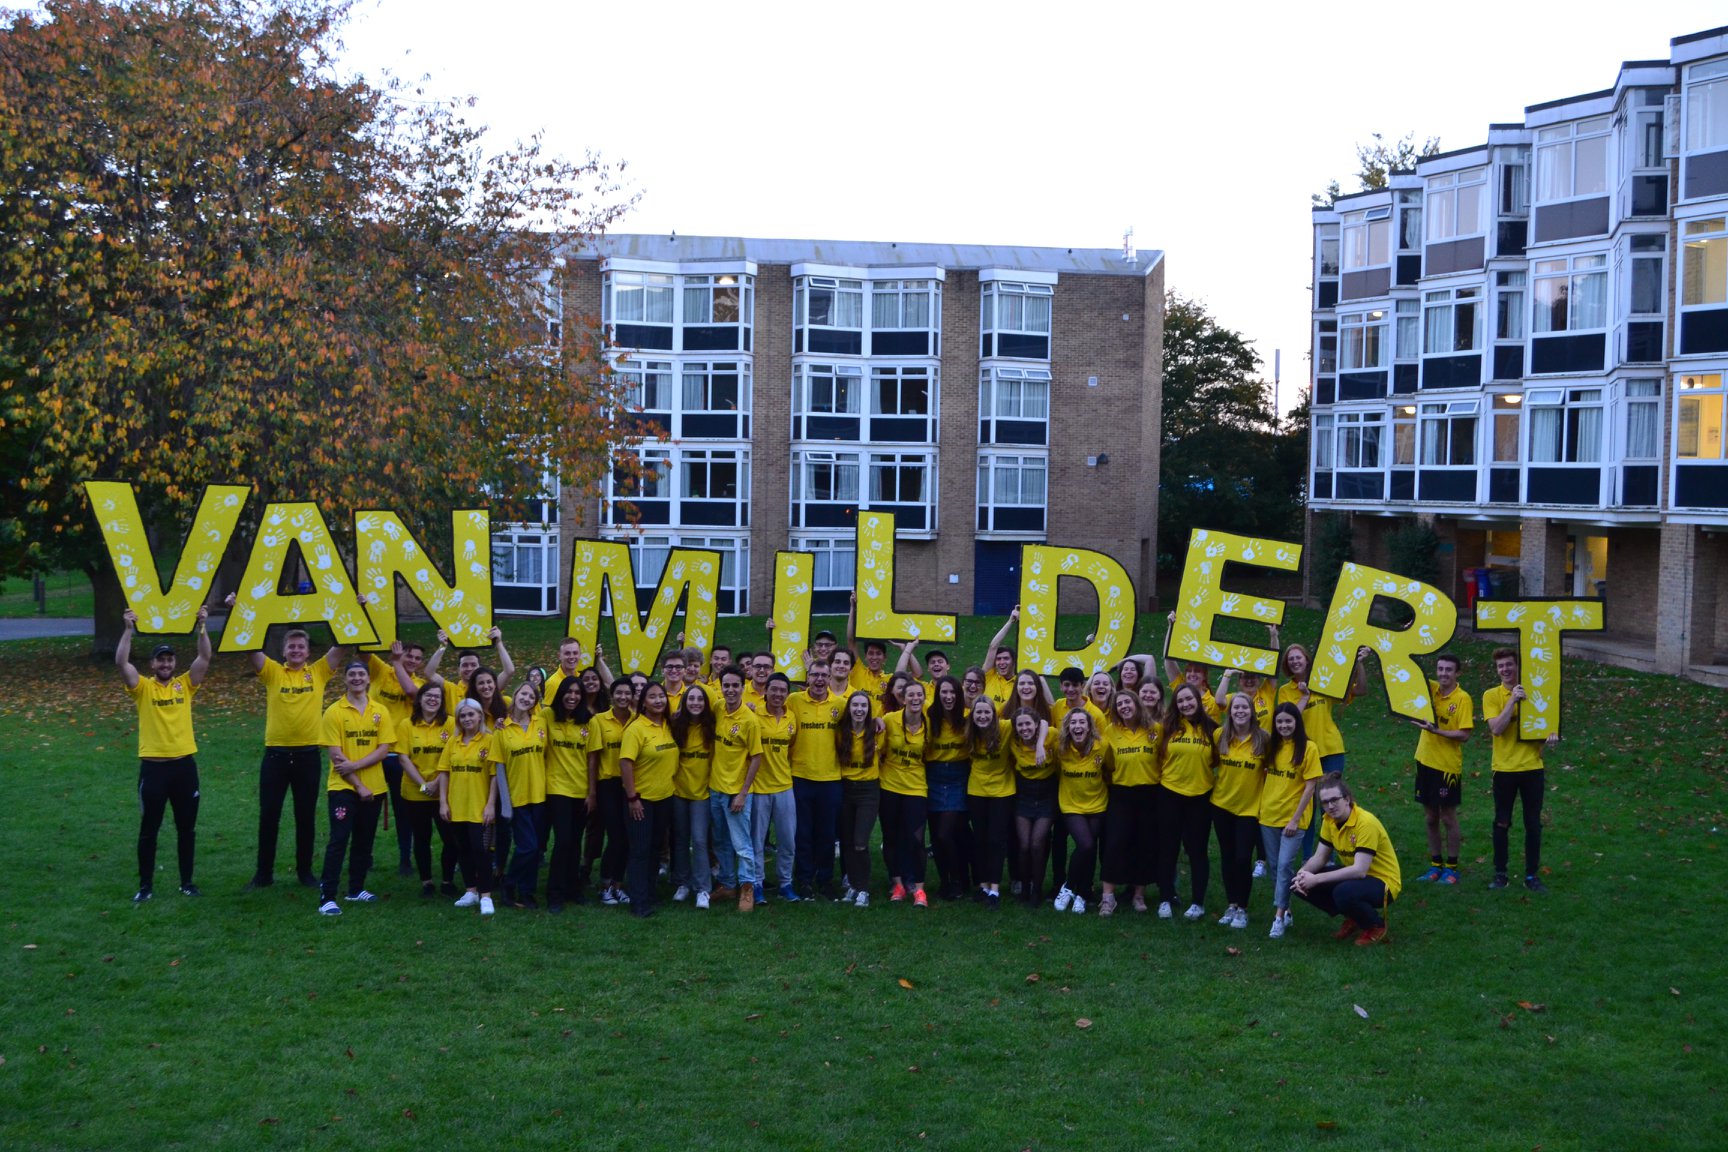 Freps in yellow holding large letters spelling Van Mildert